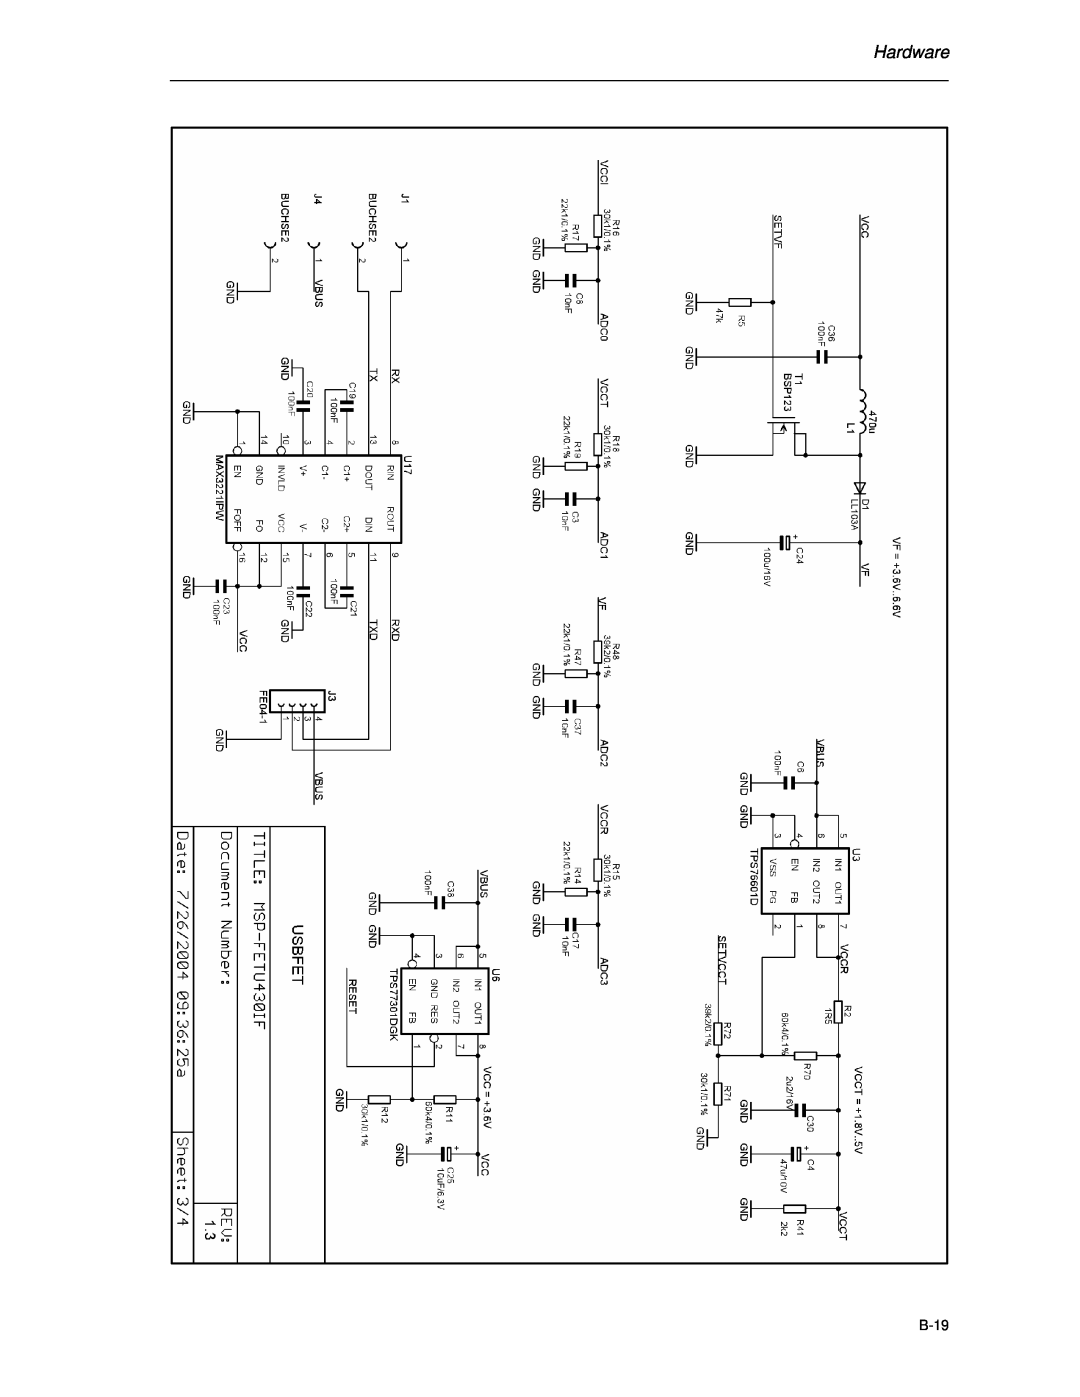 Texas Instruments MSP-FET430 manual Hardware, B-19 